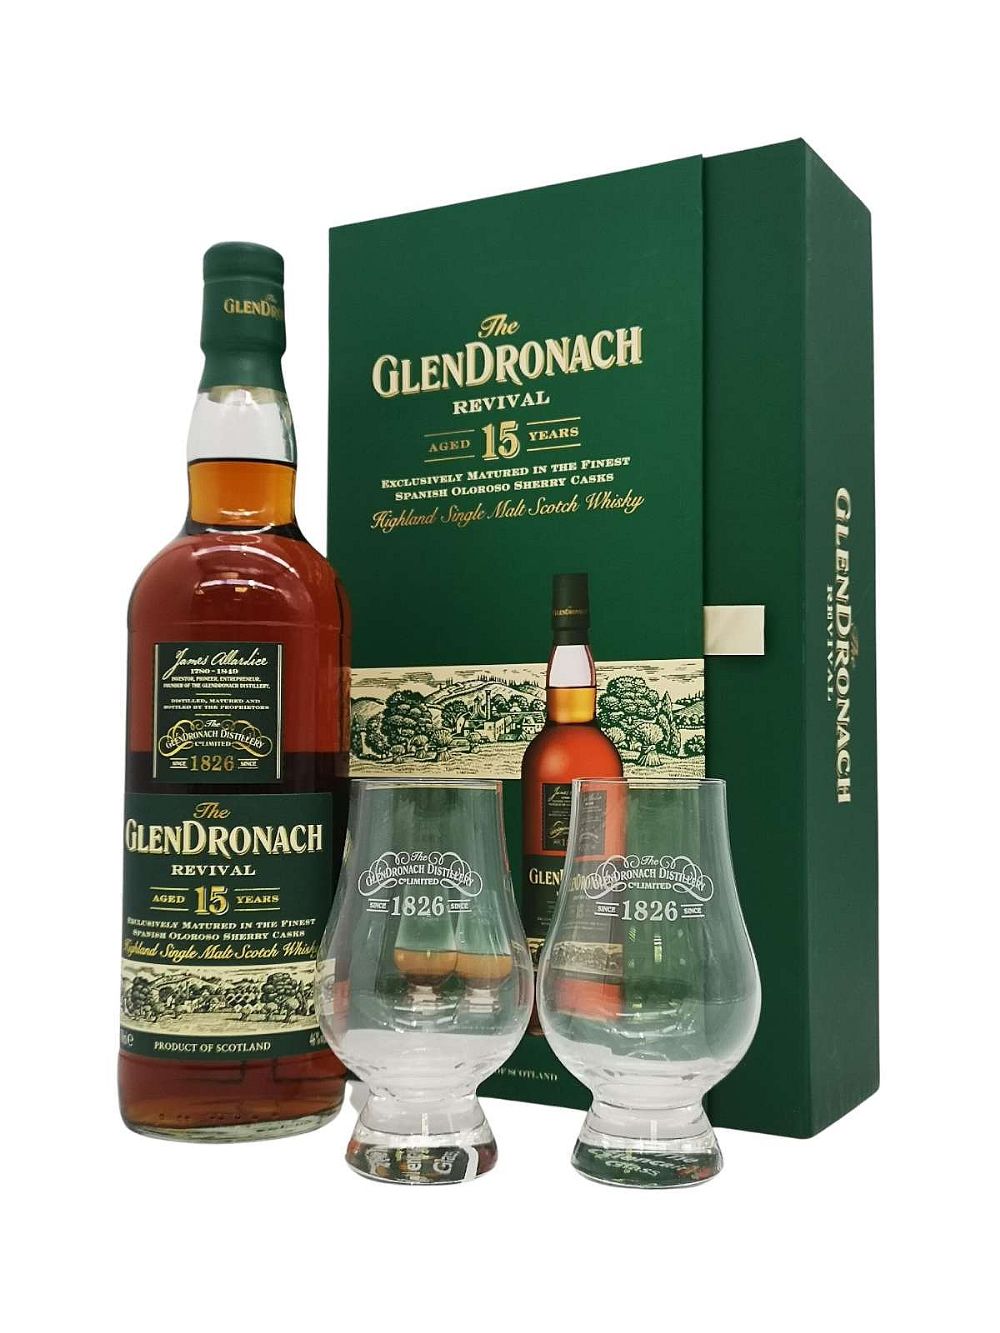 The GlenDronach 15 year old Revival Scotch Malt Whisky (gift set